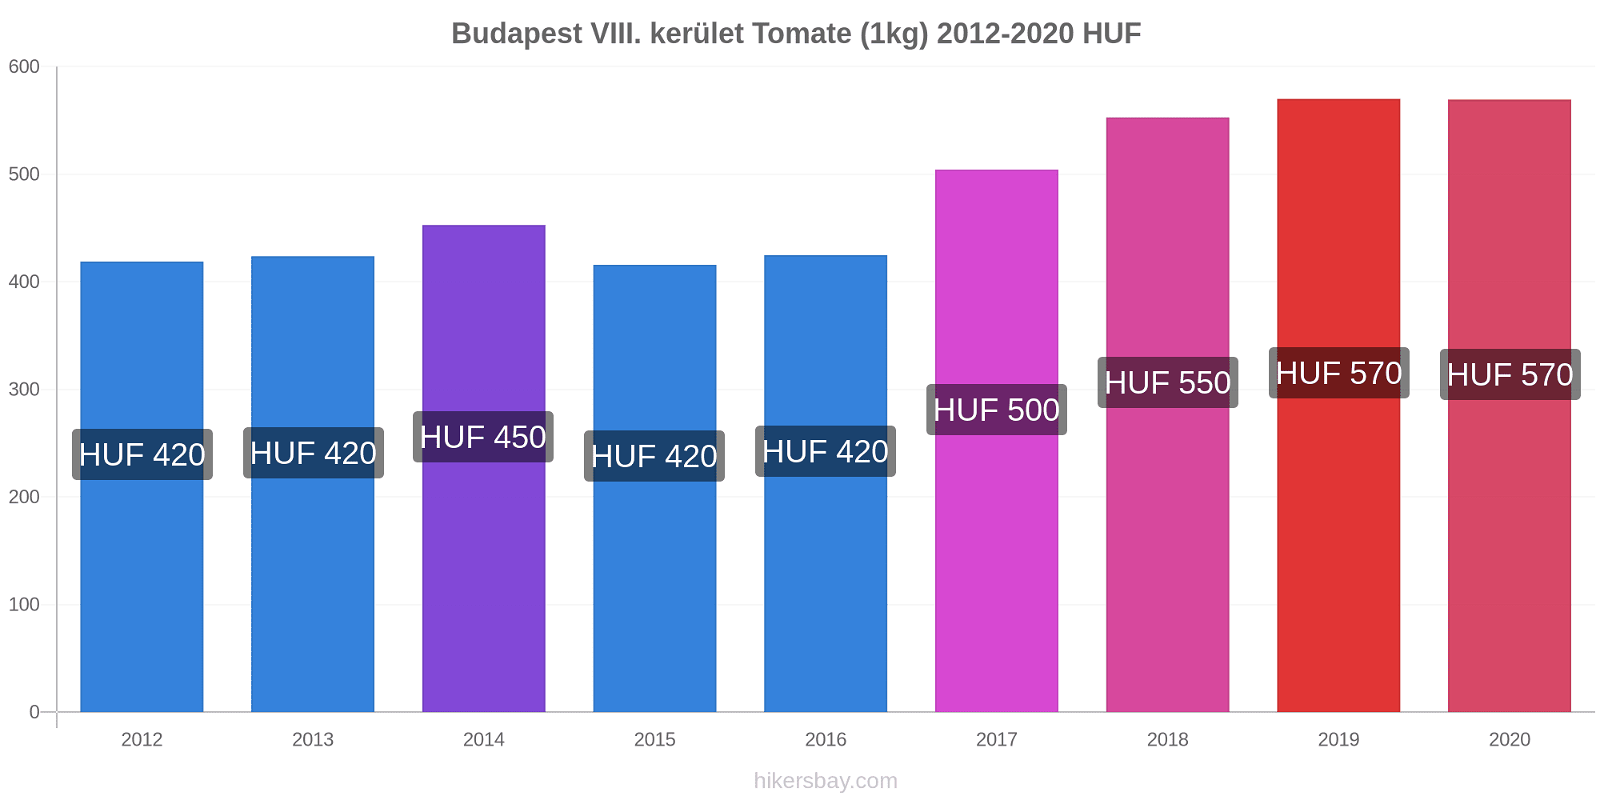 Budapest VIII. kerület changements de prix Tomate (1kg) hikersbay.com